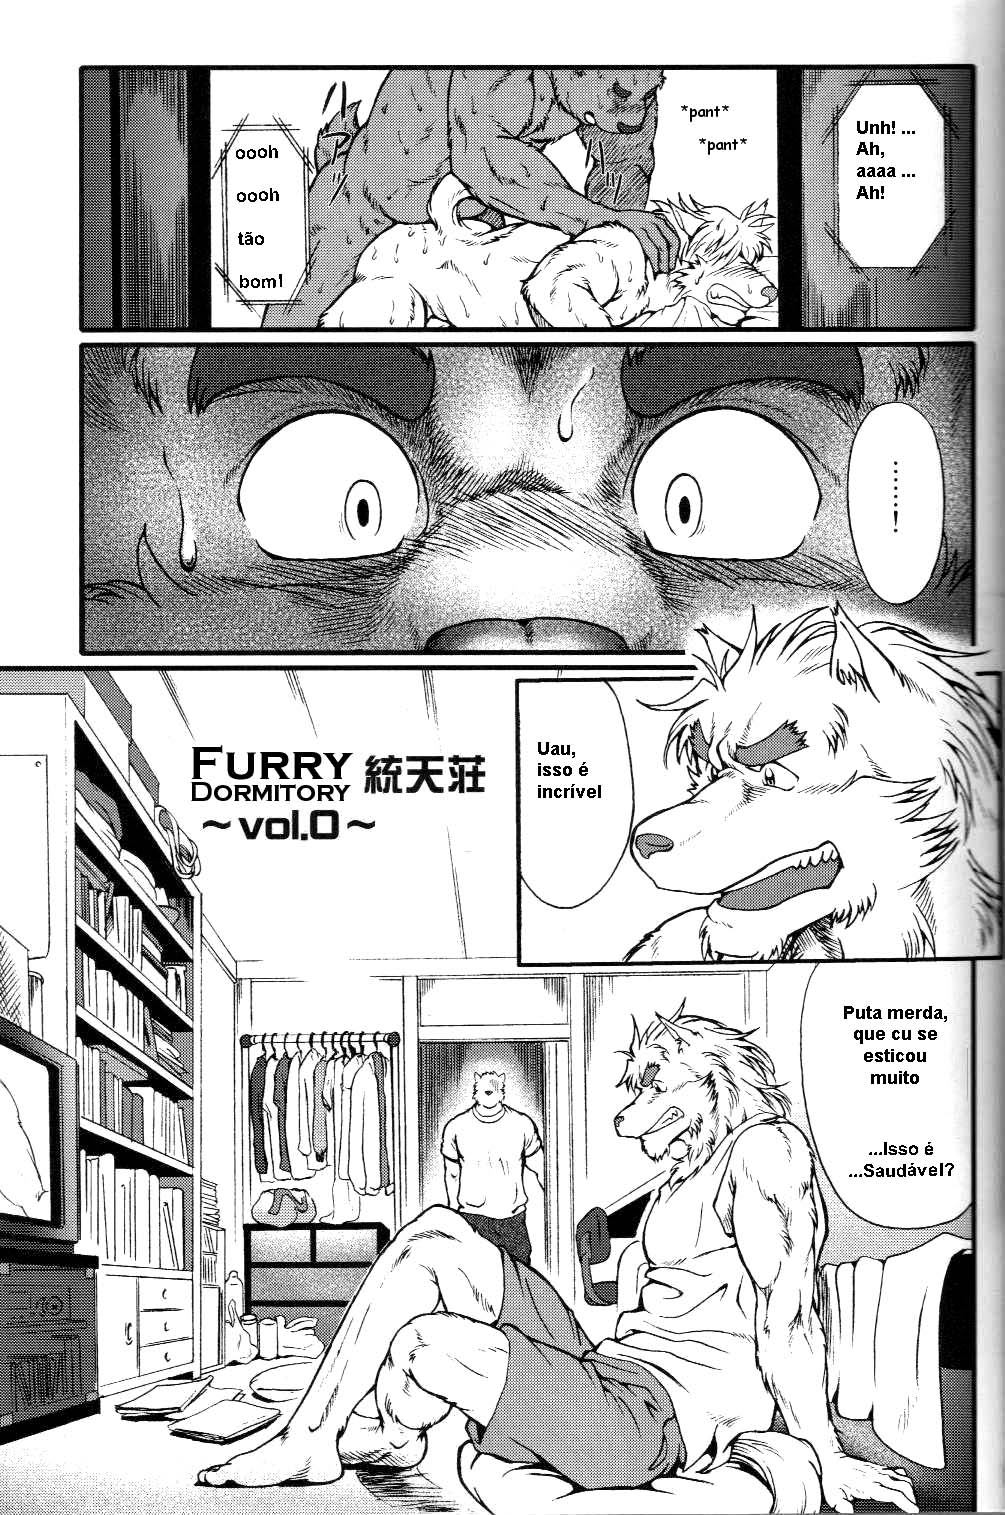 Dormitorio Furry (Jin) (Manga) - F DE FURRY